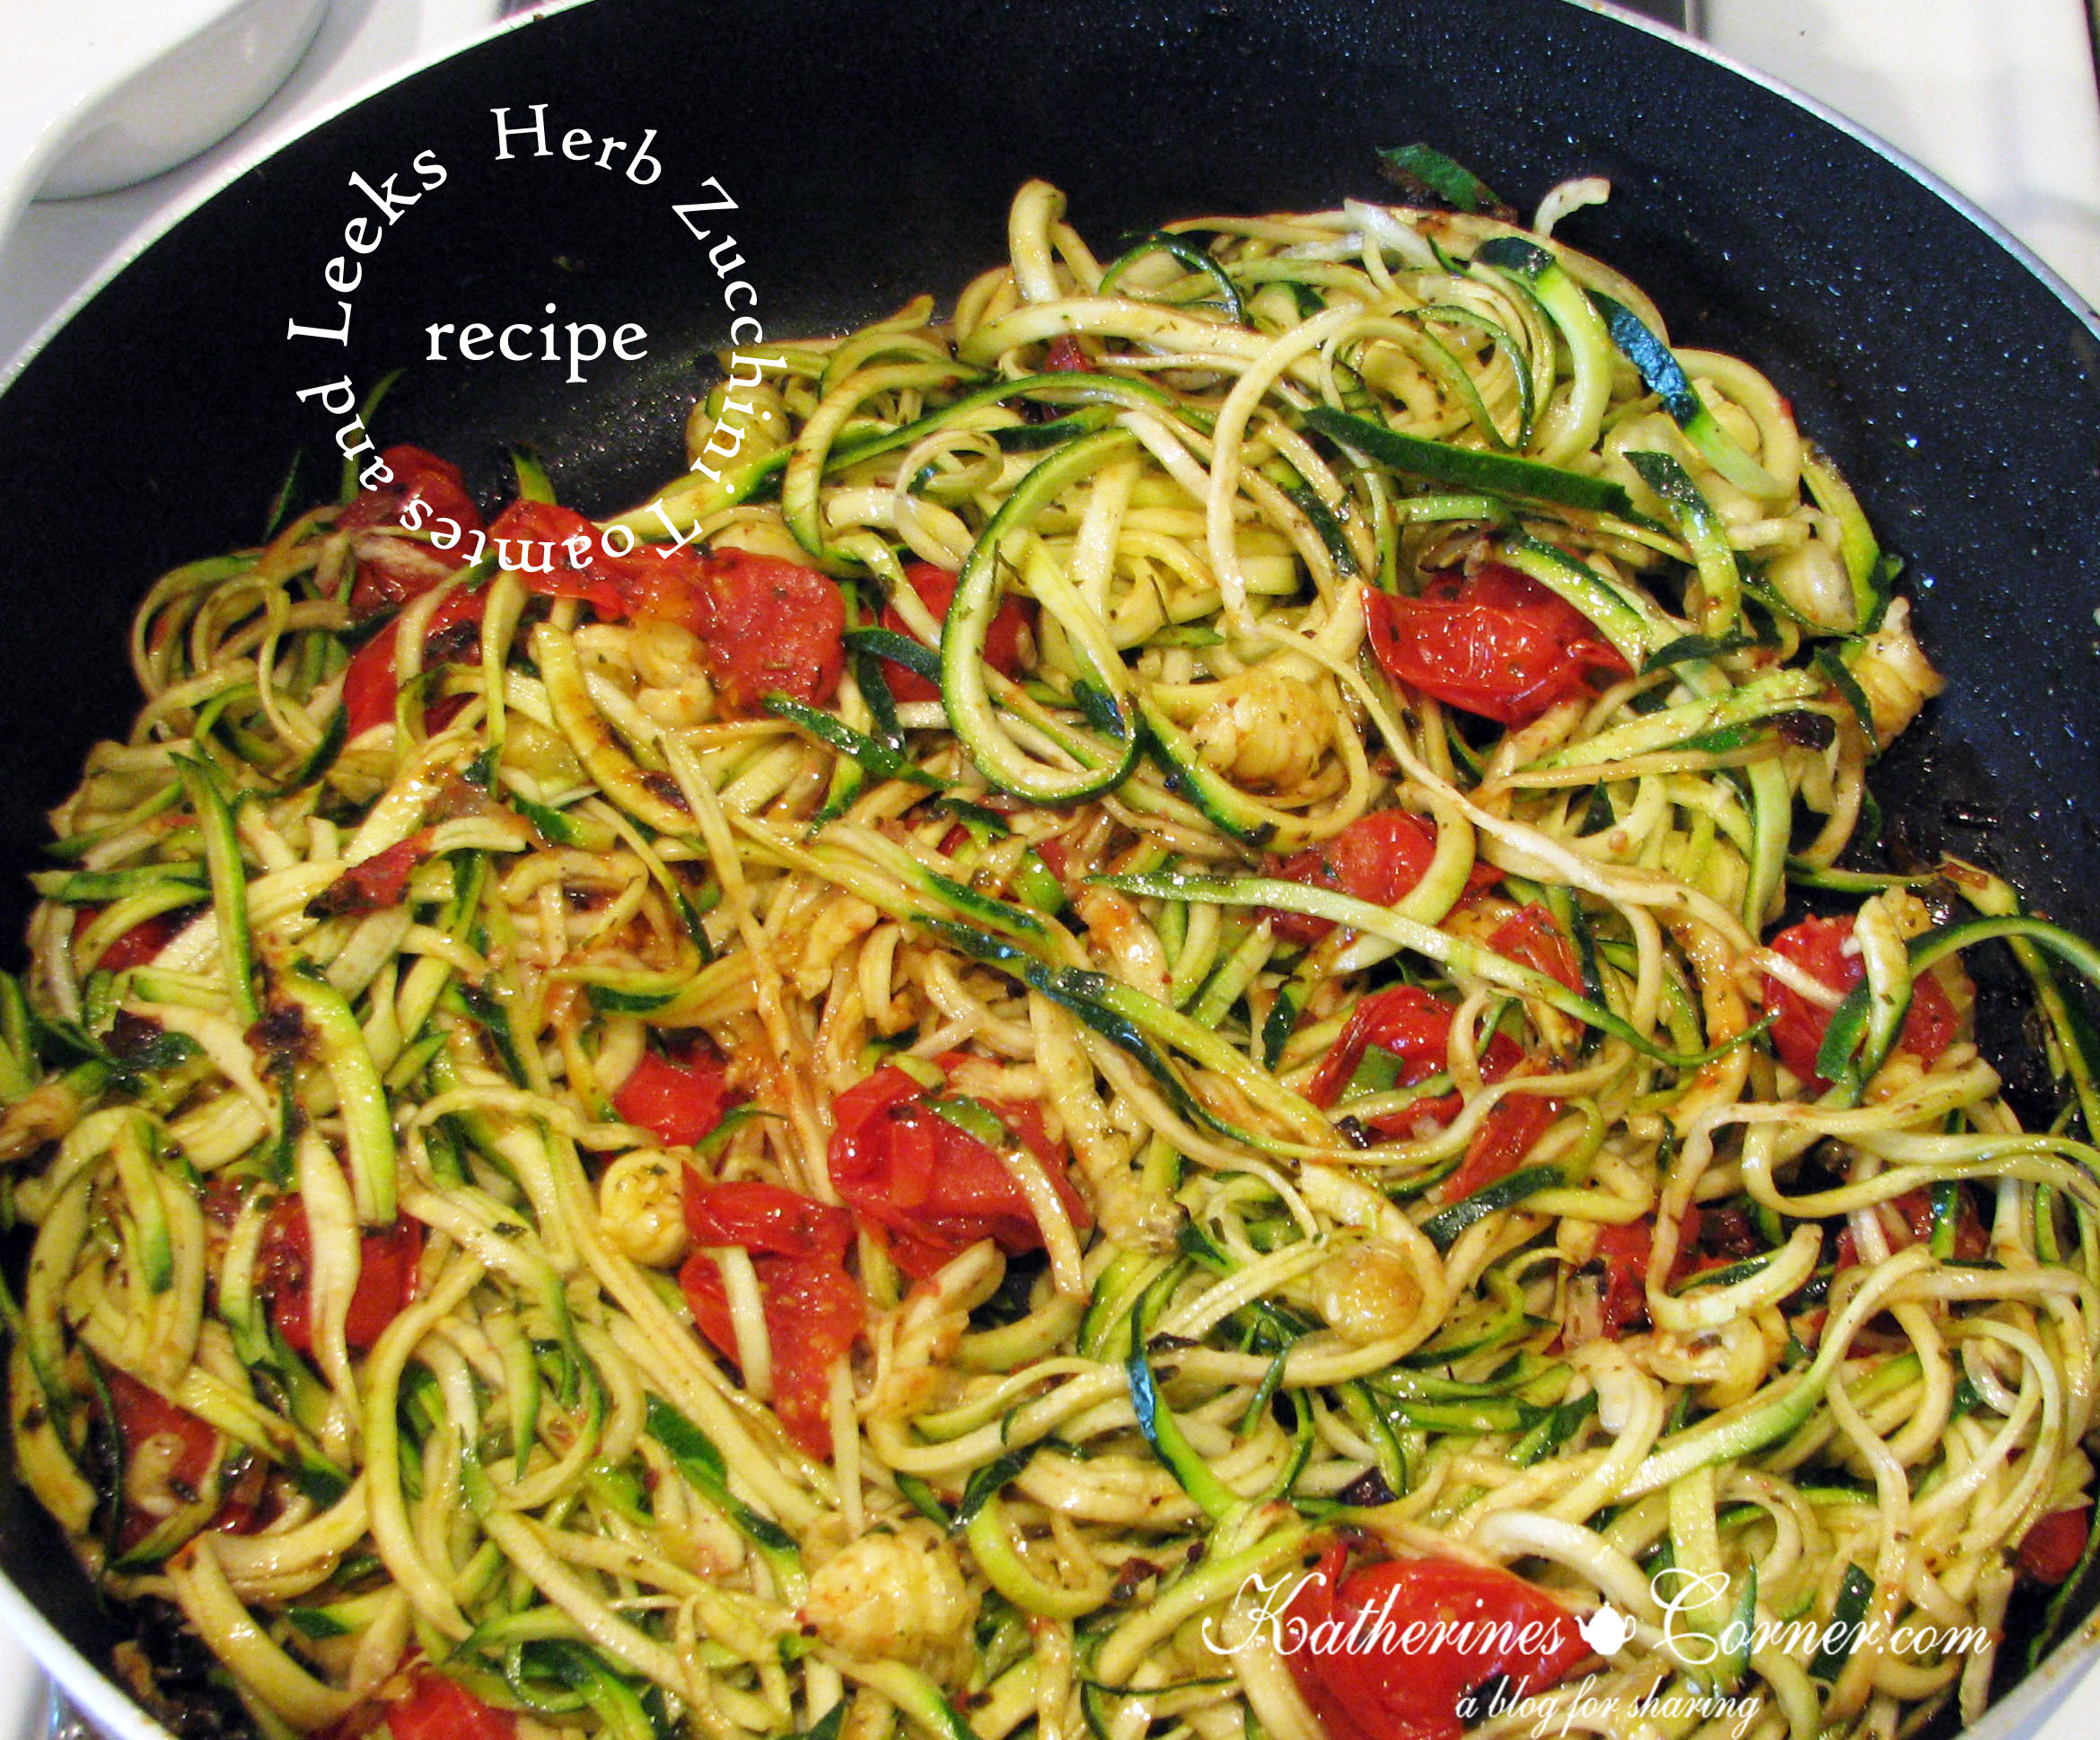 Herb Zucchini Tomatoes and Leeks Recipe